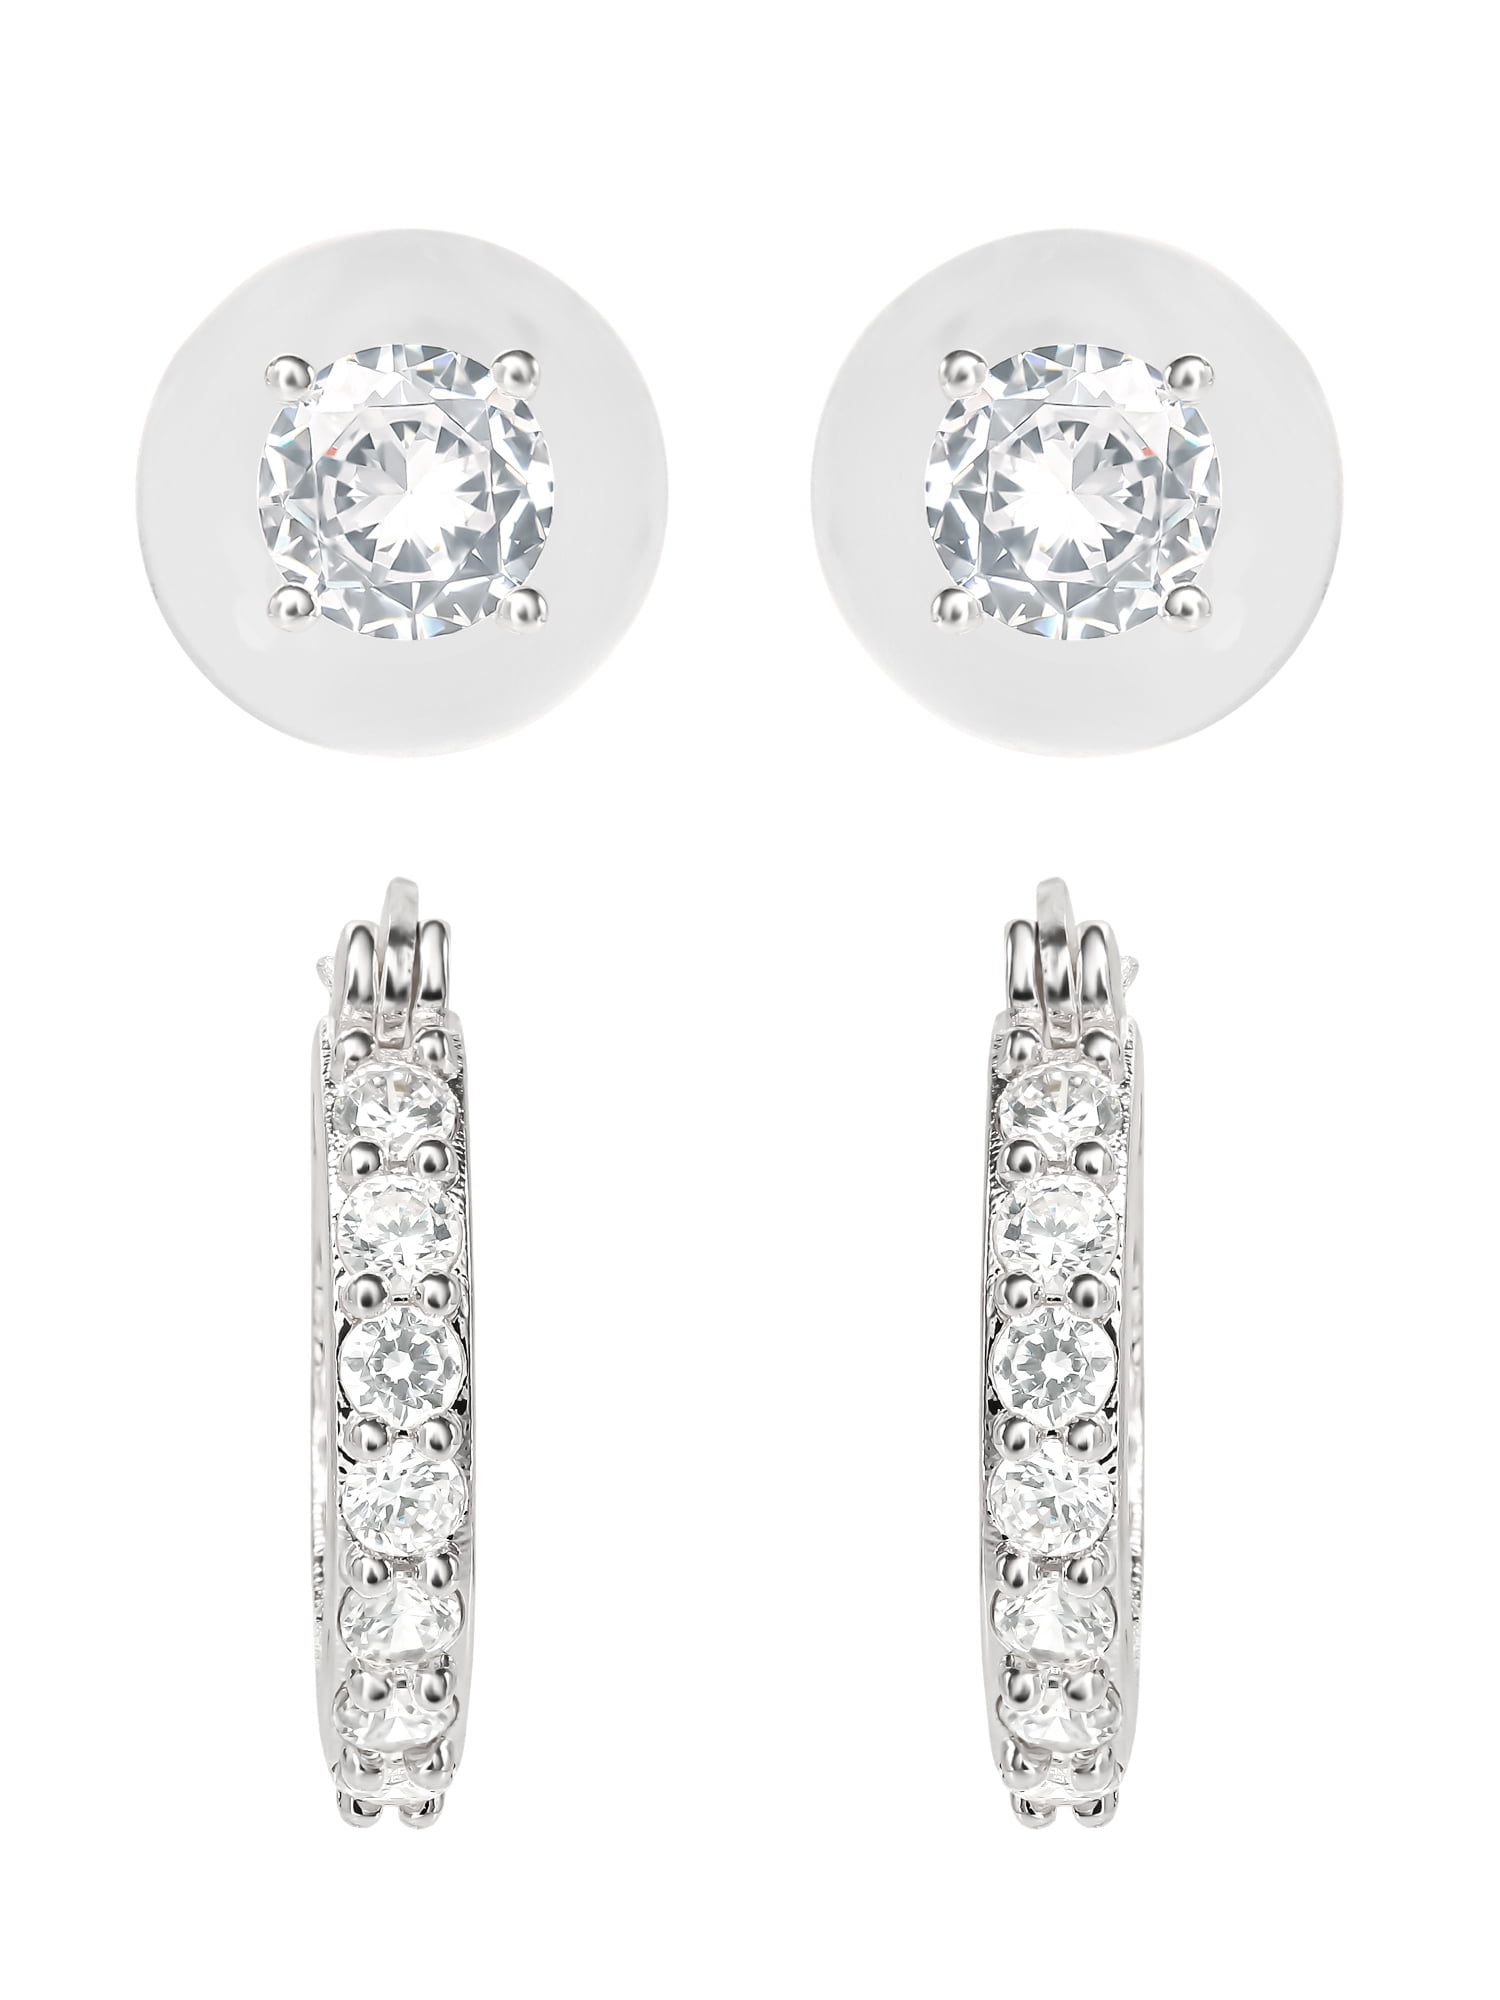 Daesar Stainless Steel Earrings Mens Womens Stud Earrings Love Heart White Cubic Zirconia Earring Silver